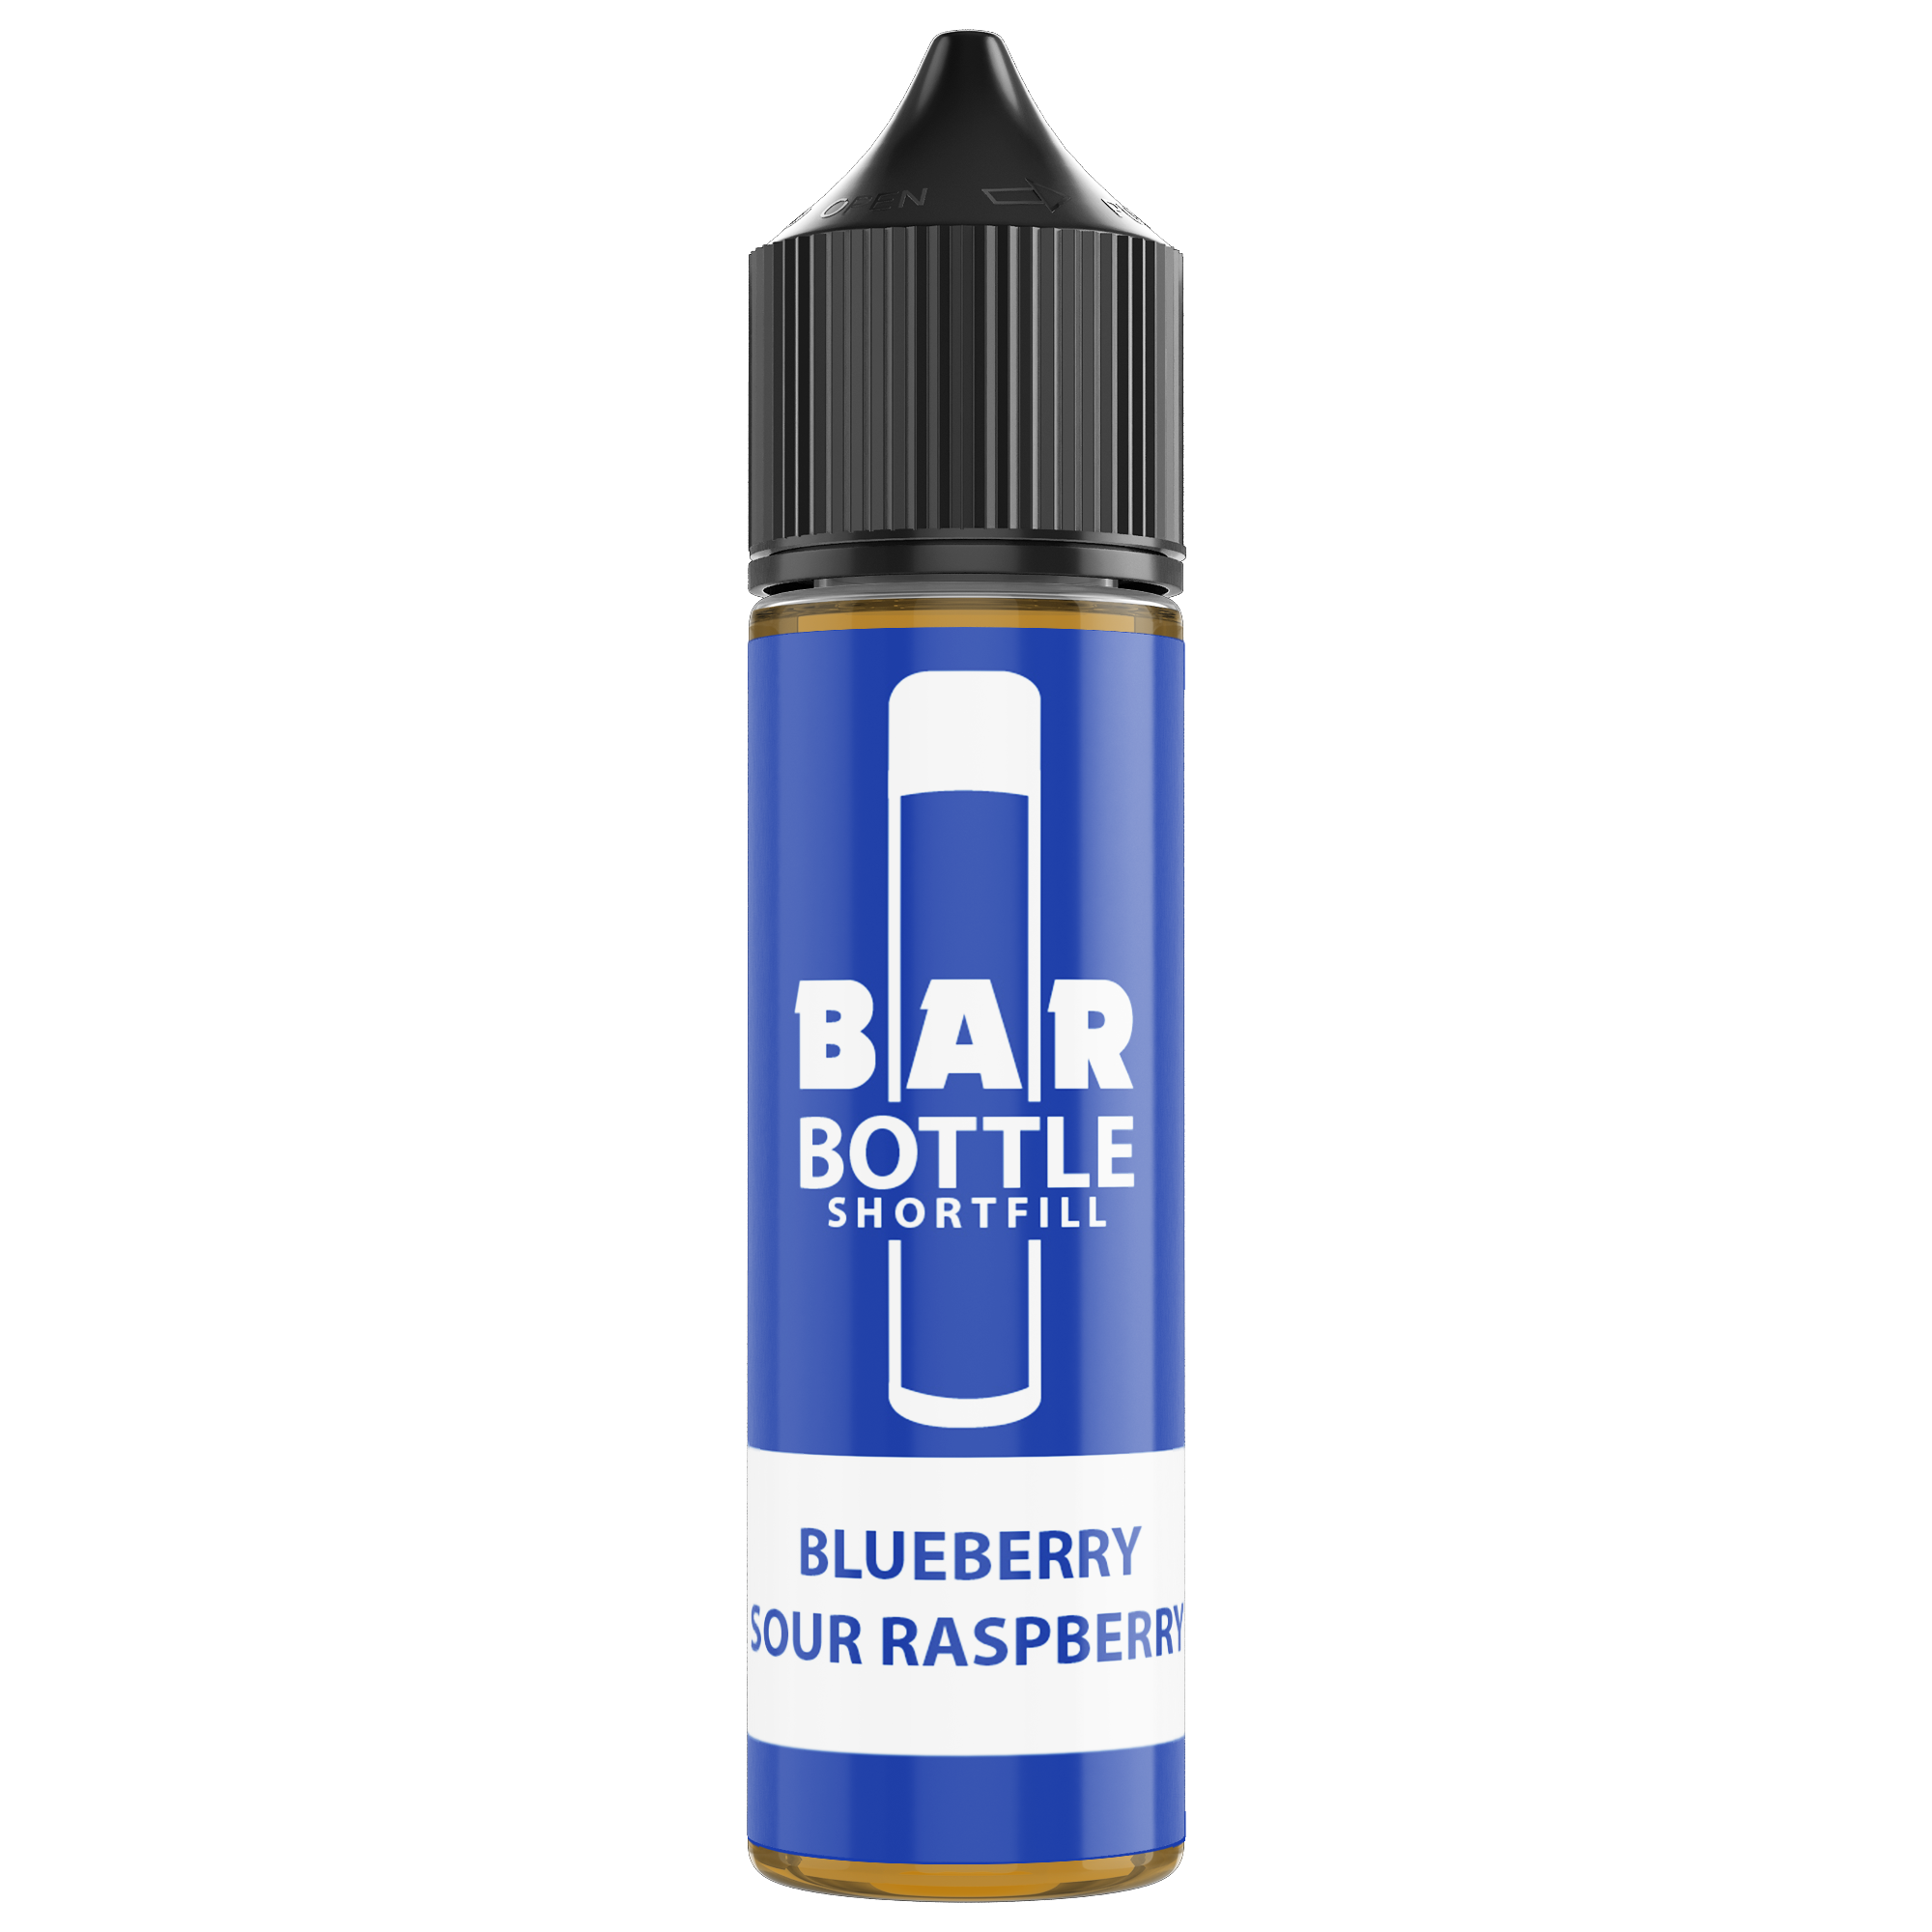 Blueberry Sour Raspberry 100ml by Bar Bottle